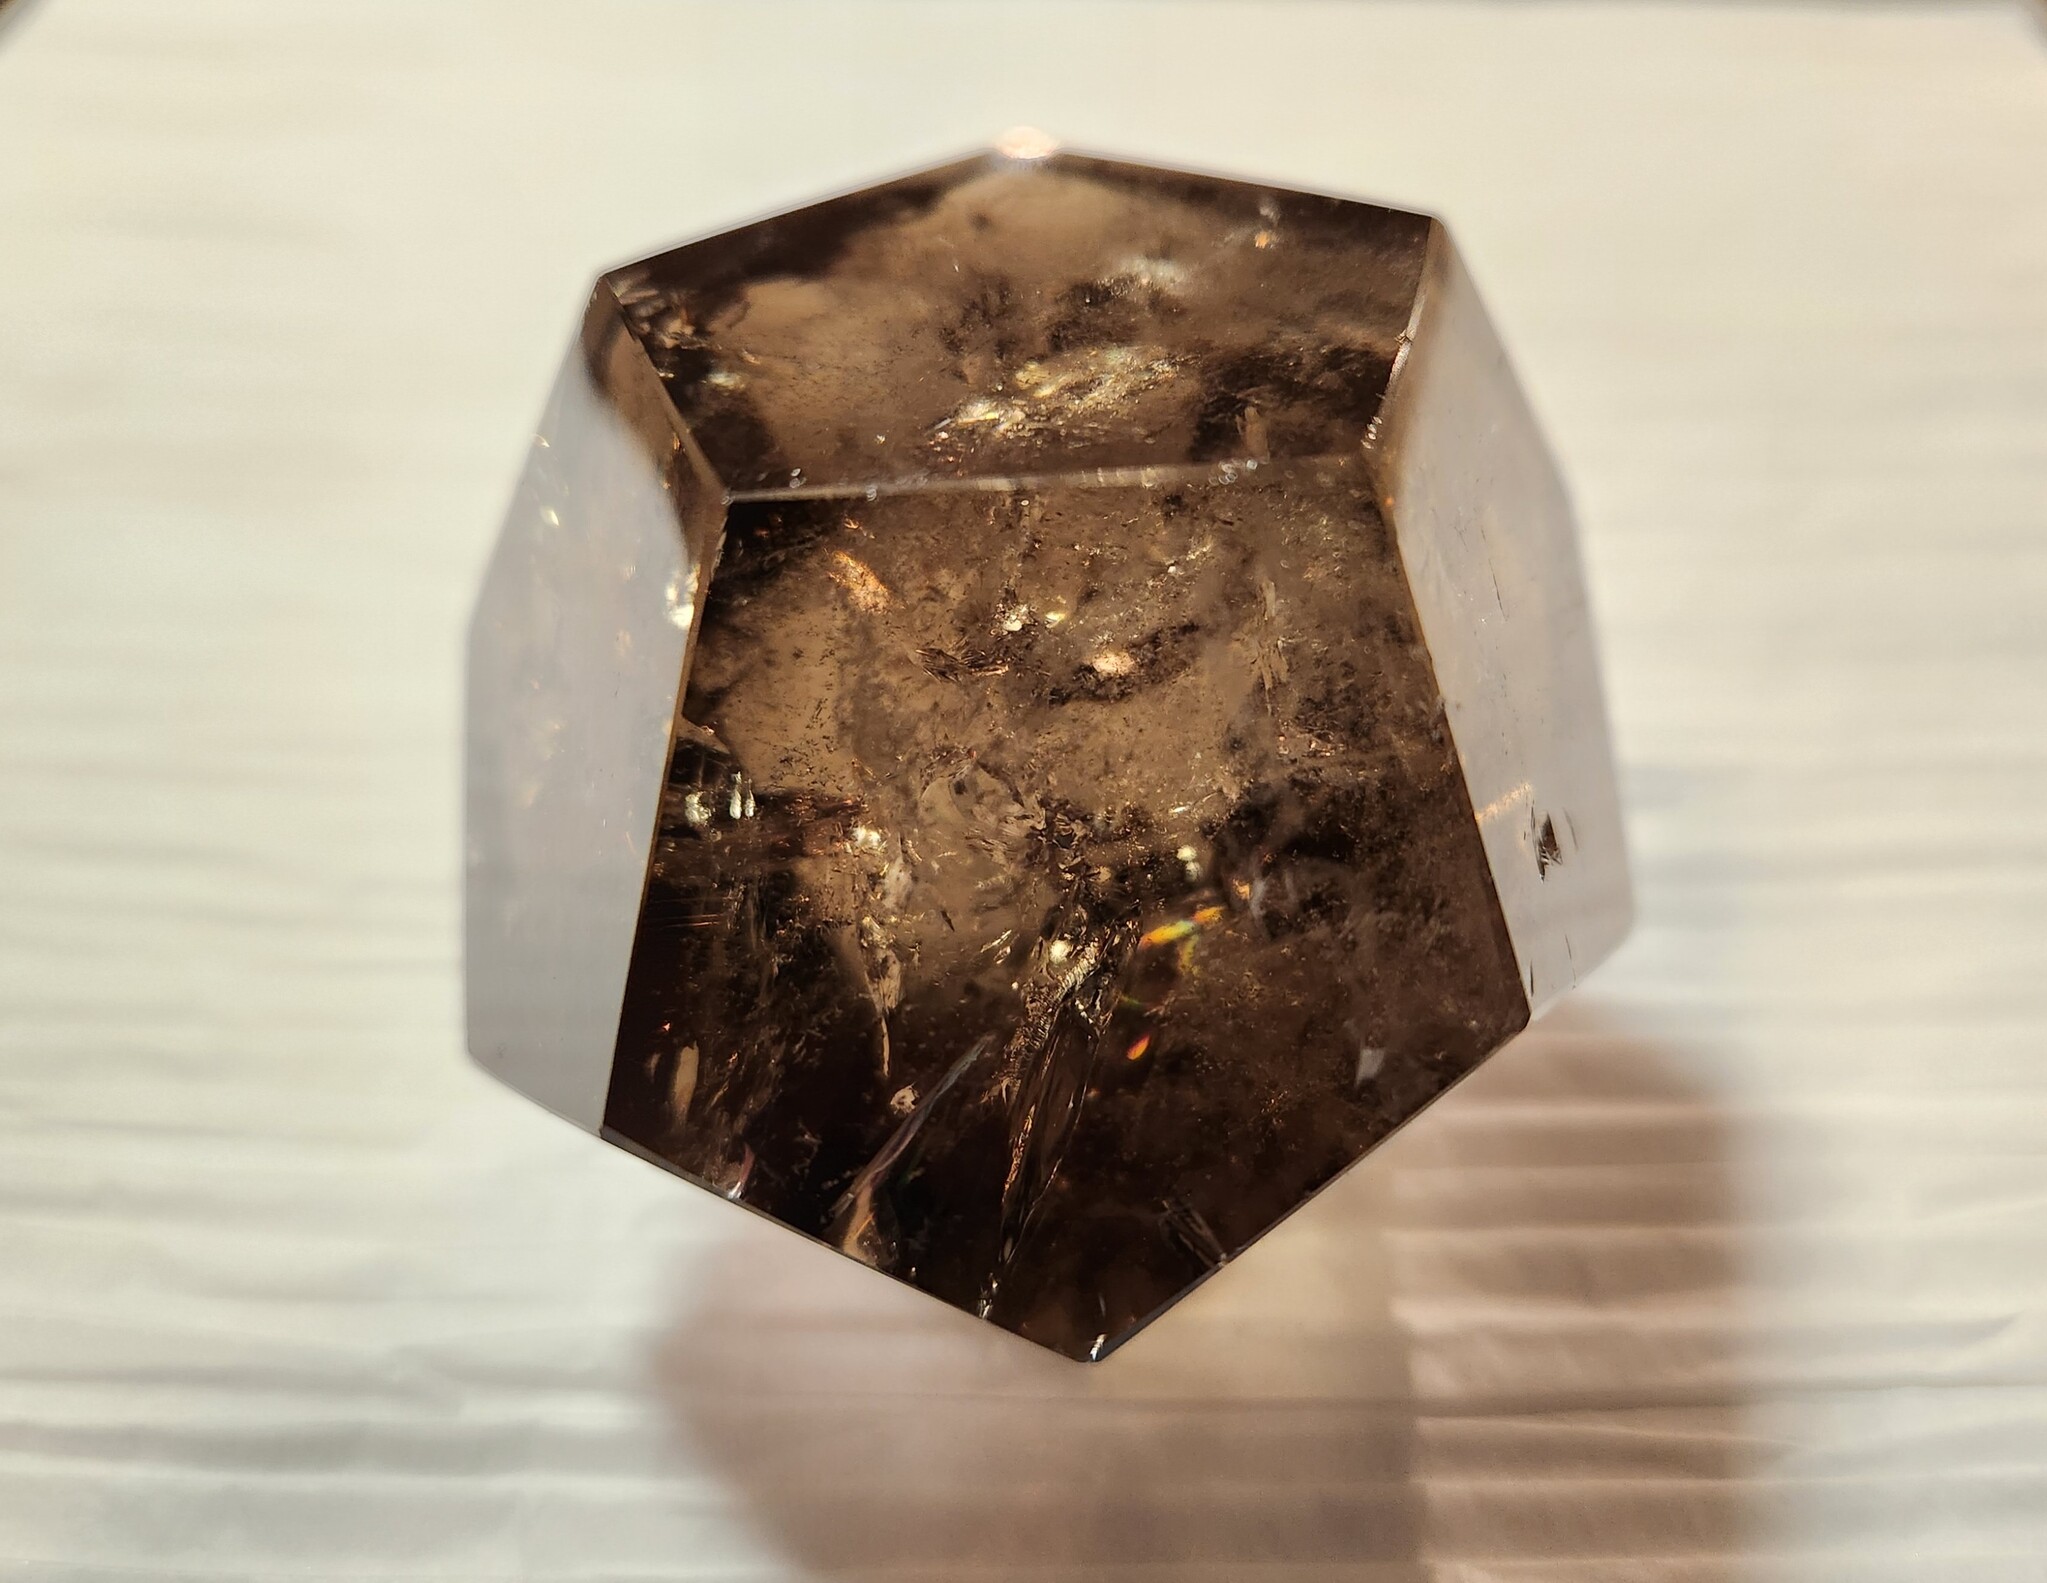 Smoky Quartz Polished Dodecahedron 2" 230g, Brazil